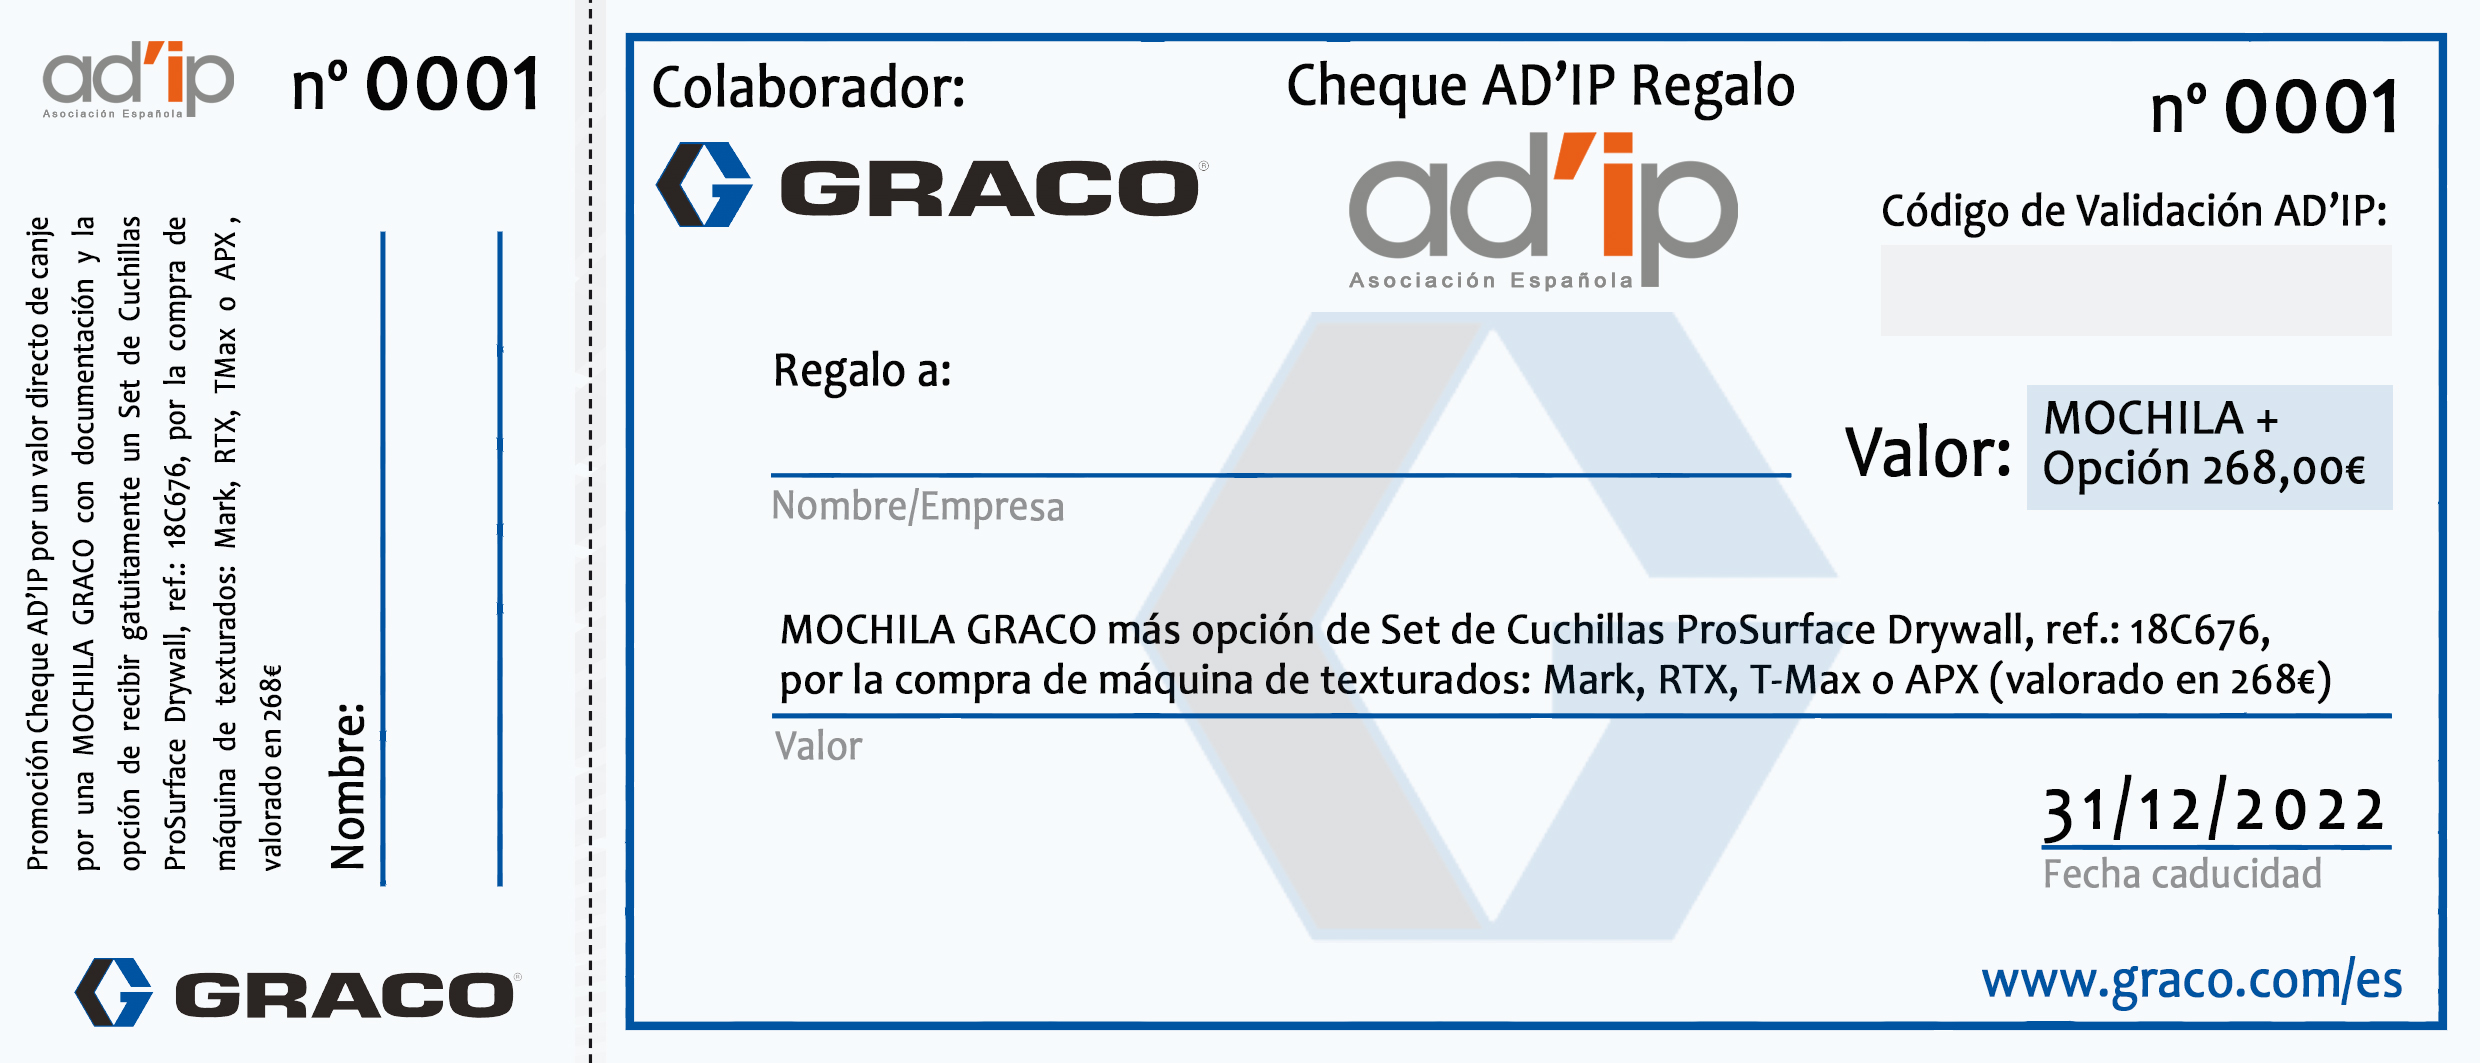 CHEQUE-AD'IP-REGALO-GRACO-2022